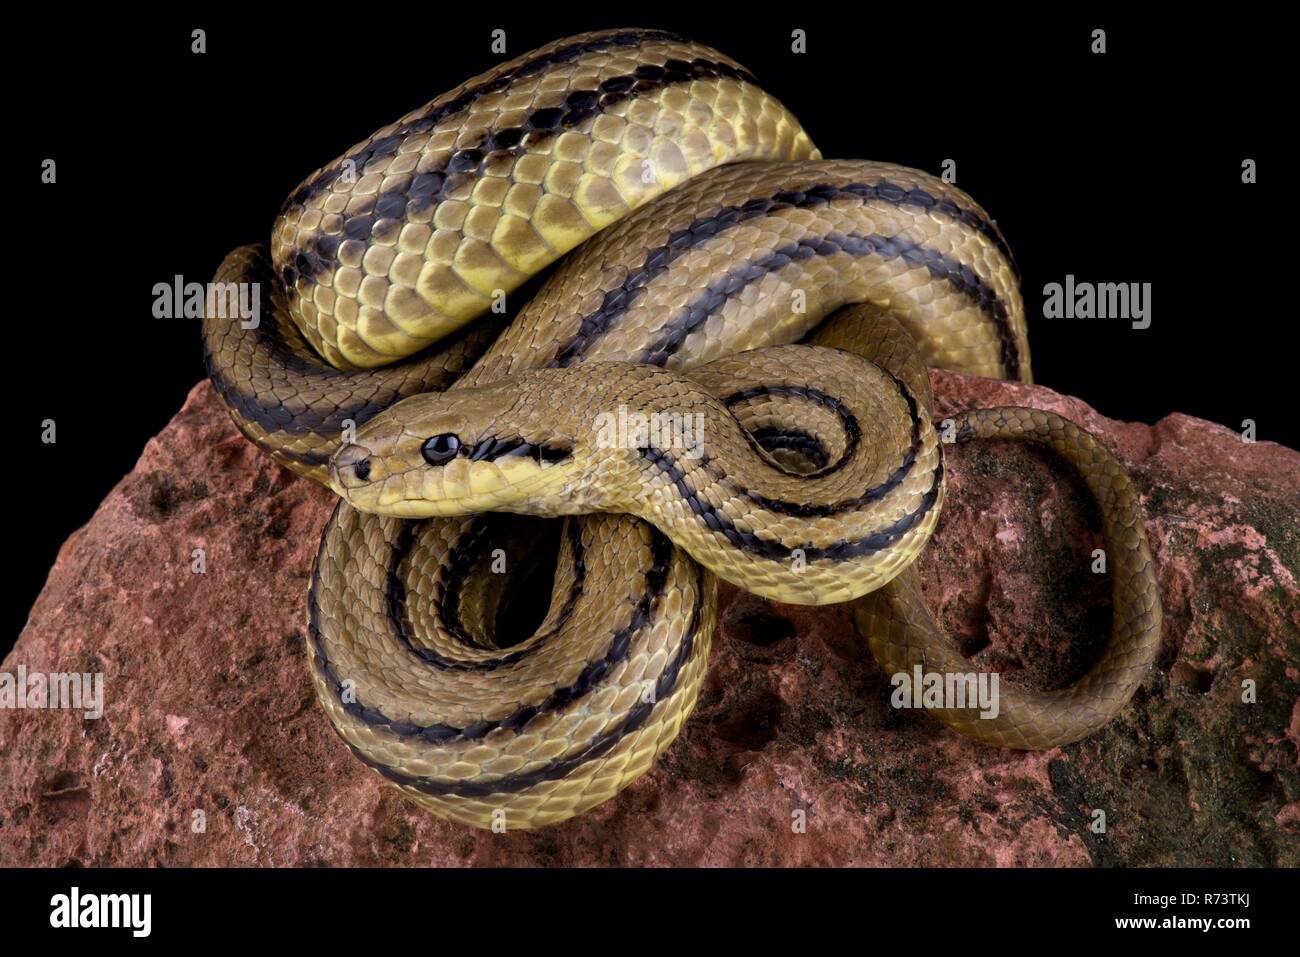 Four-lined snake (Elaphe quatuorlineata) Stock Photo